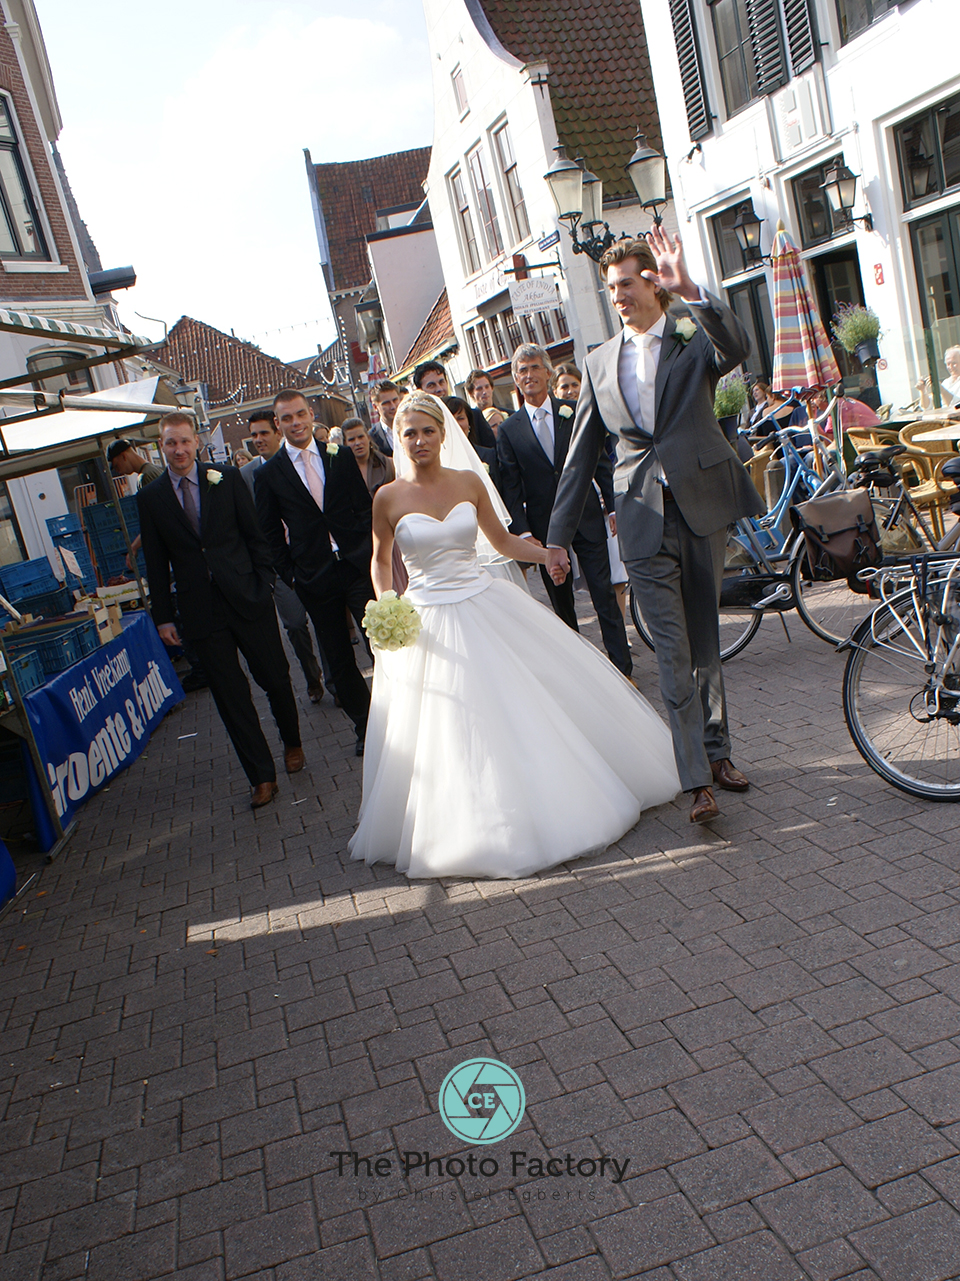 Trouwen in Amersfoort fotograaf amersfoort bruiloft trouwen De Hof markt wandelen binnenstad trouwstoet